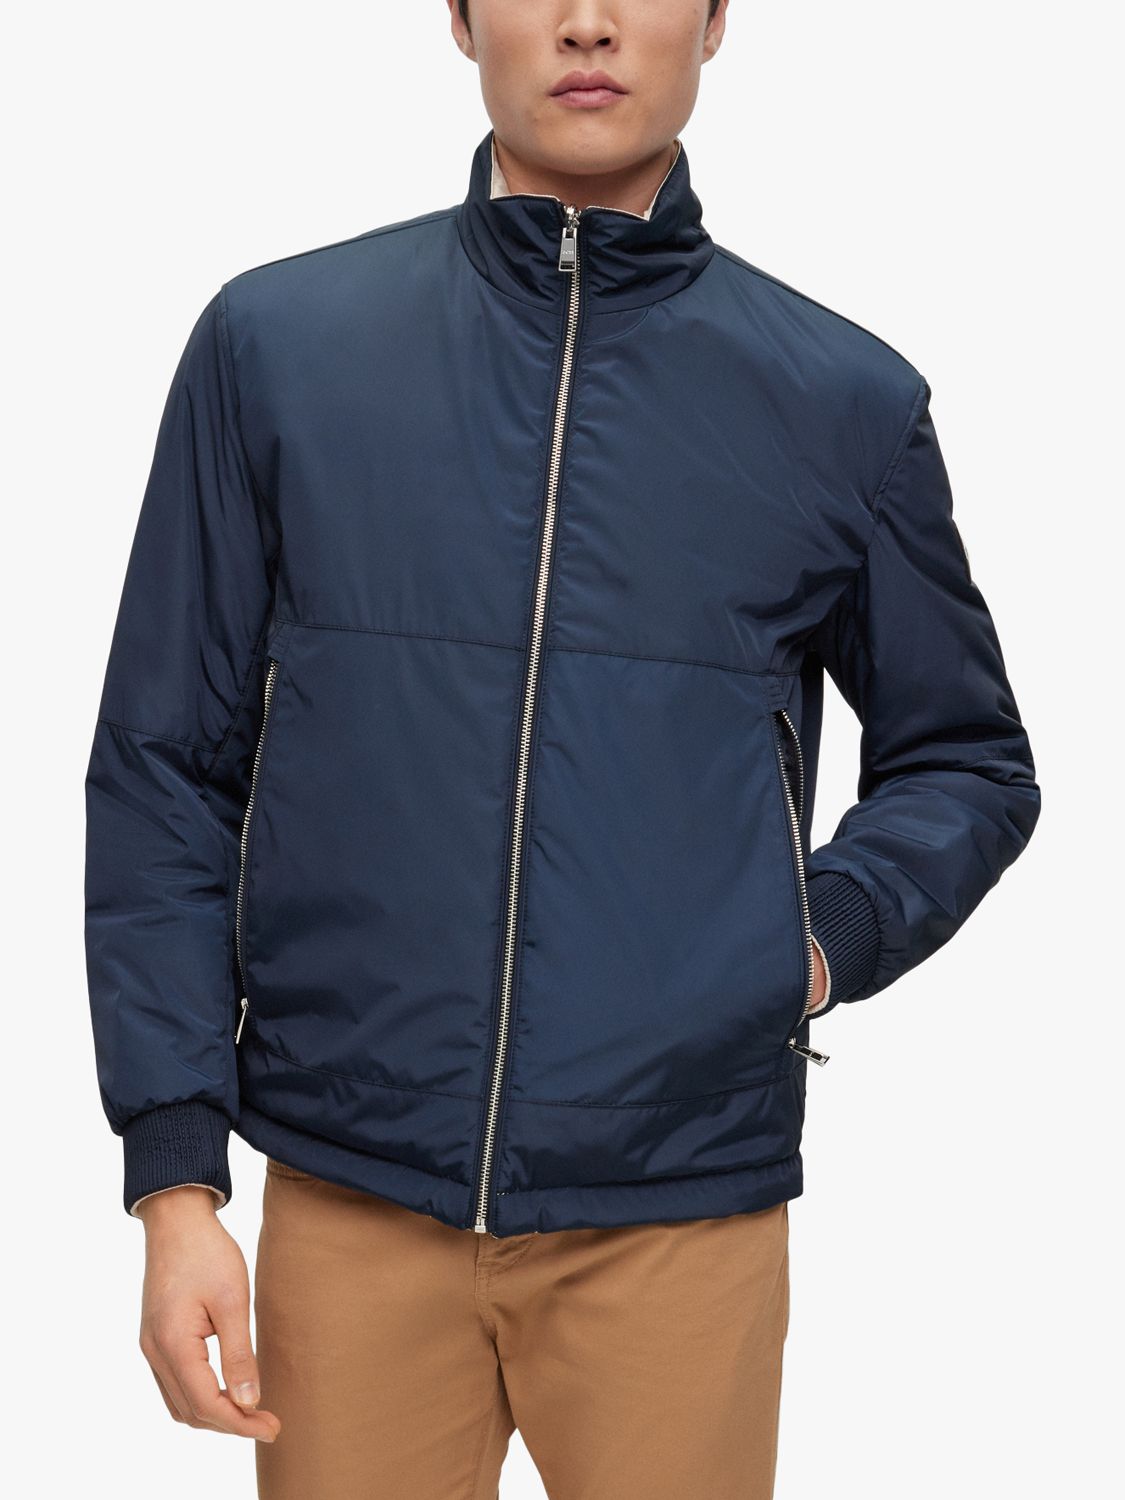 BOSS Crepin Reversible Zip Jacket, Dark Blue/Cream